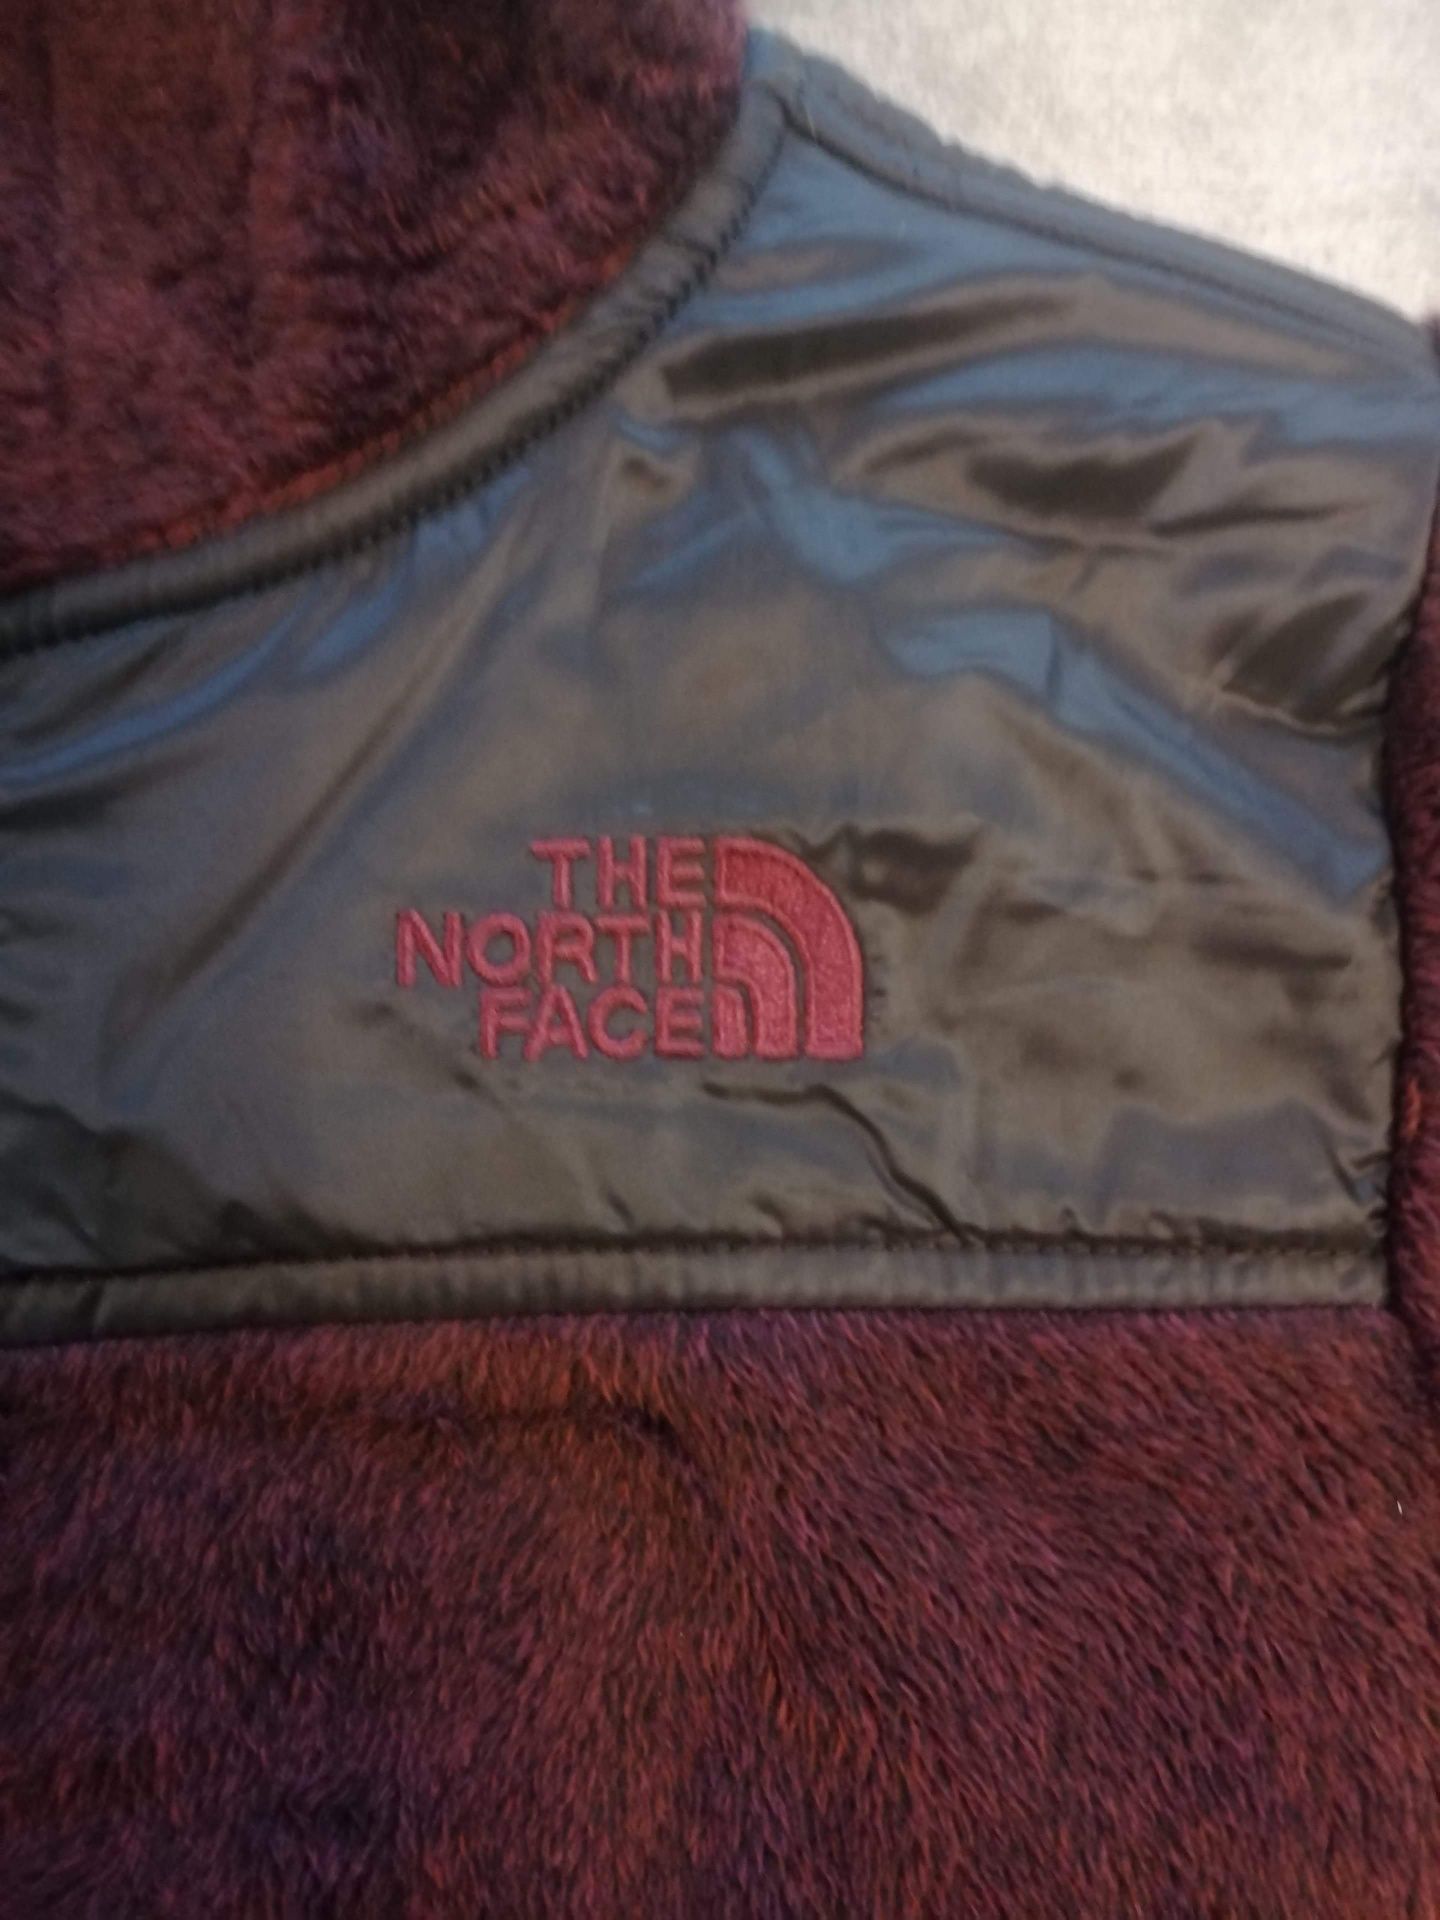 Bluza dziecieca marki "The North Face"